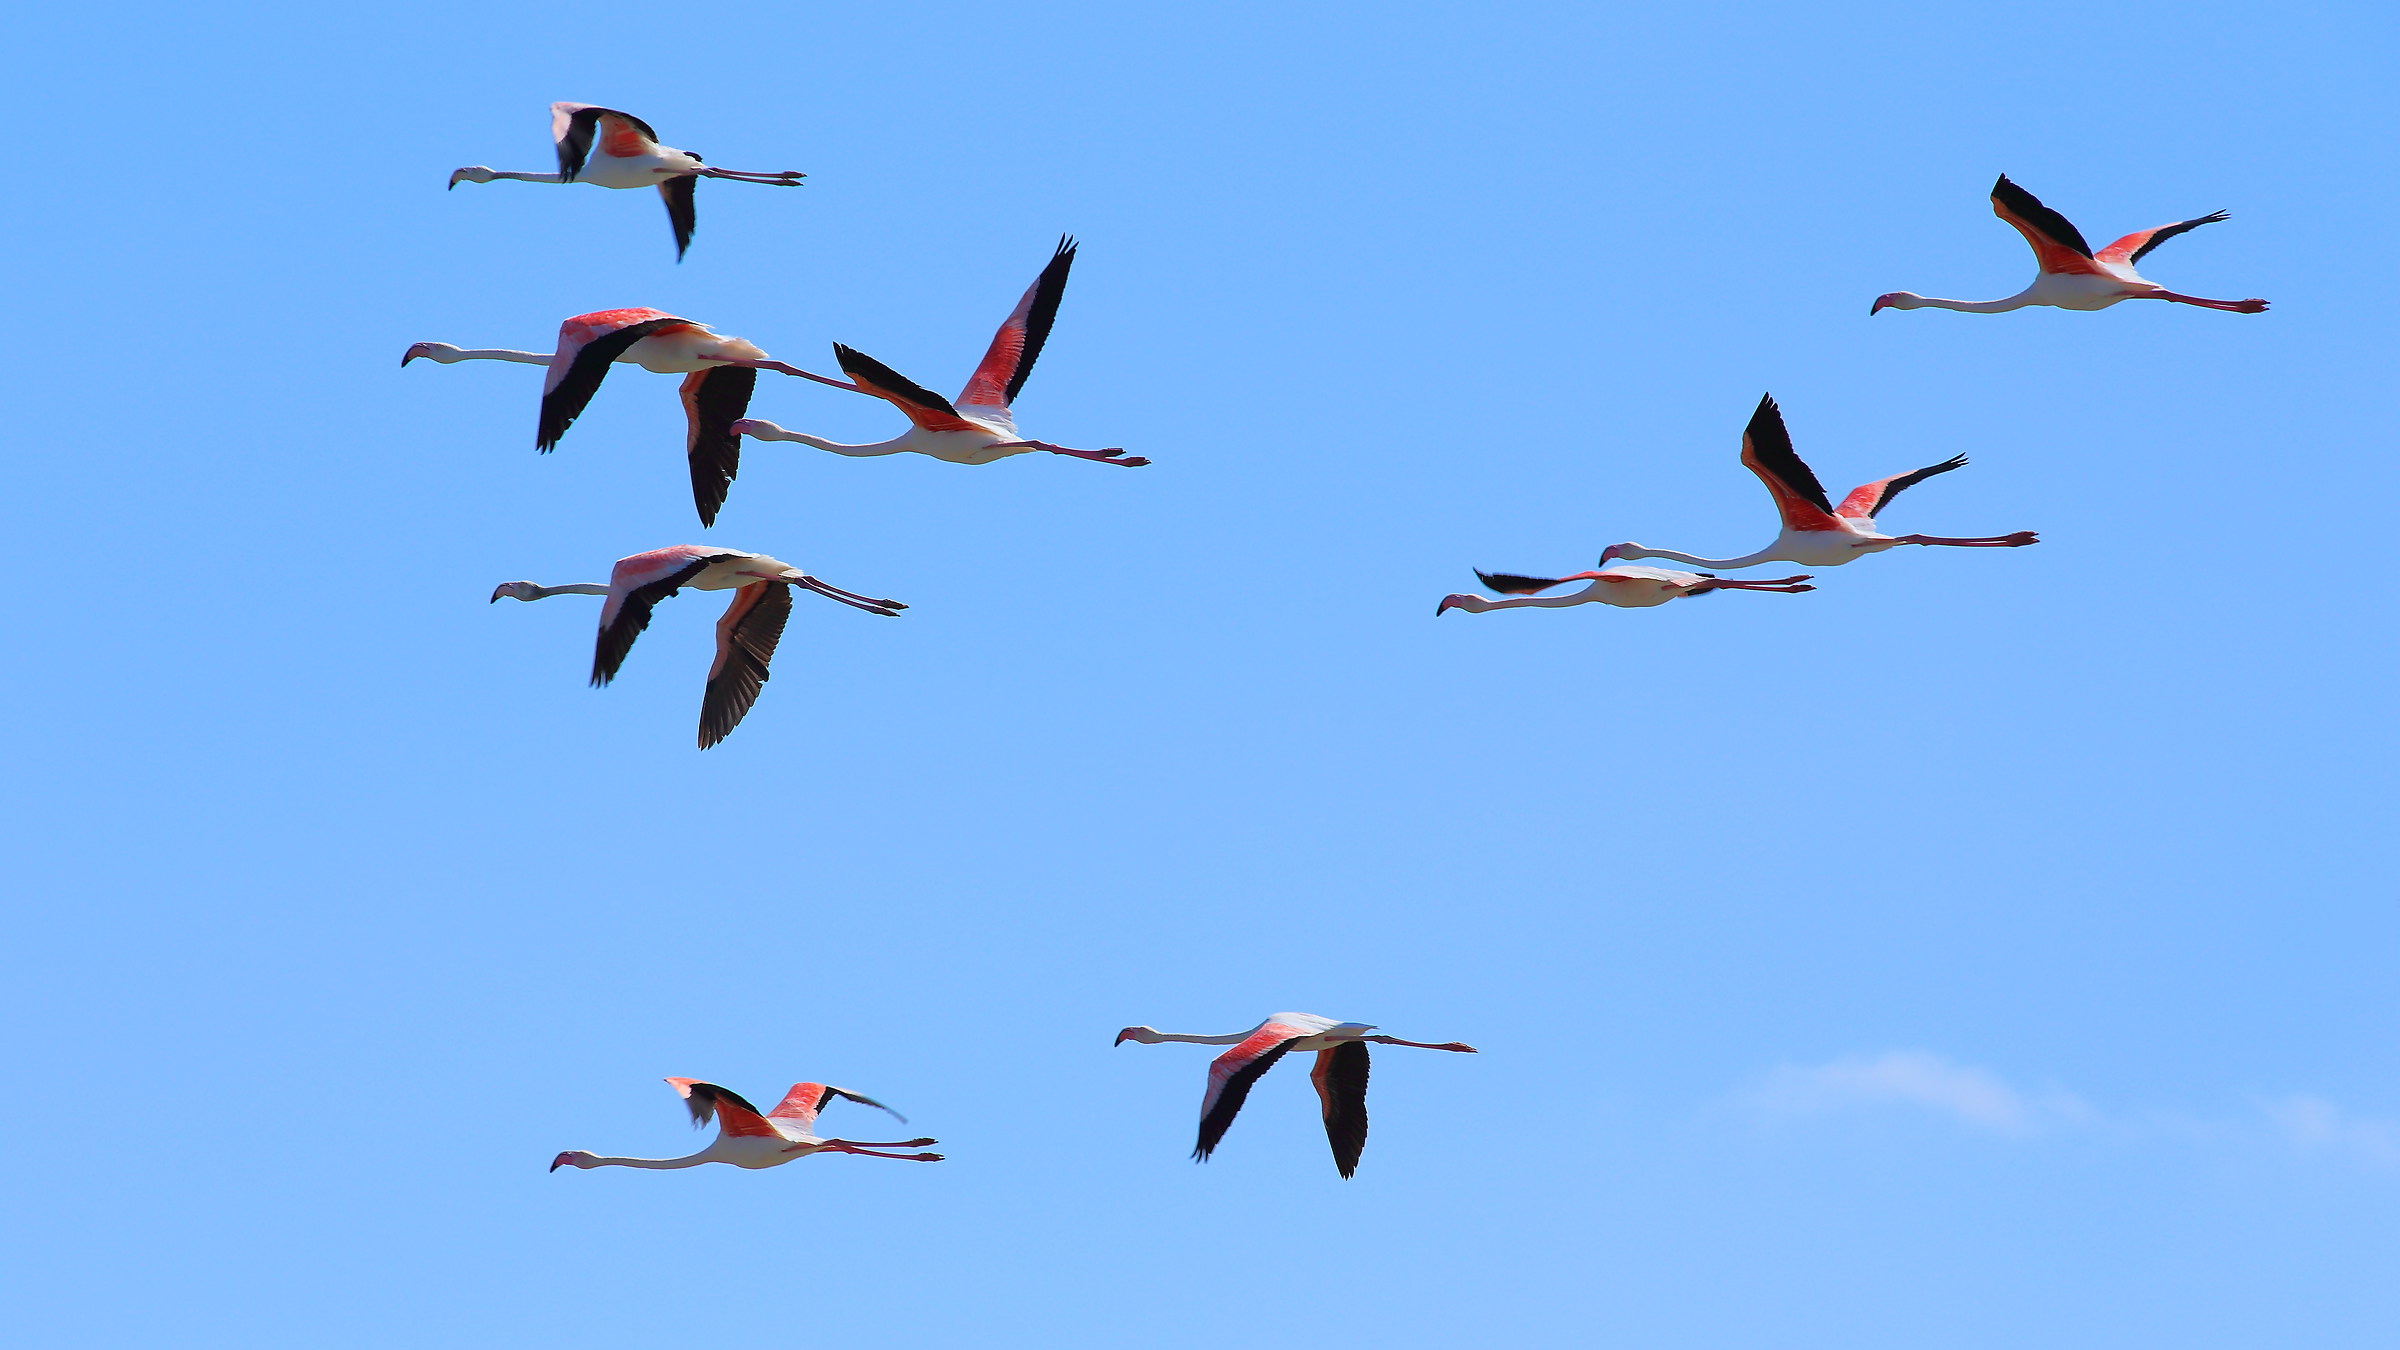 The flight of flamingos...